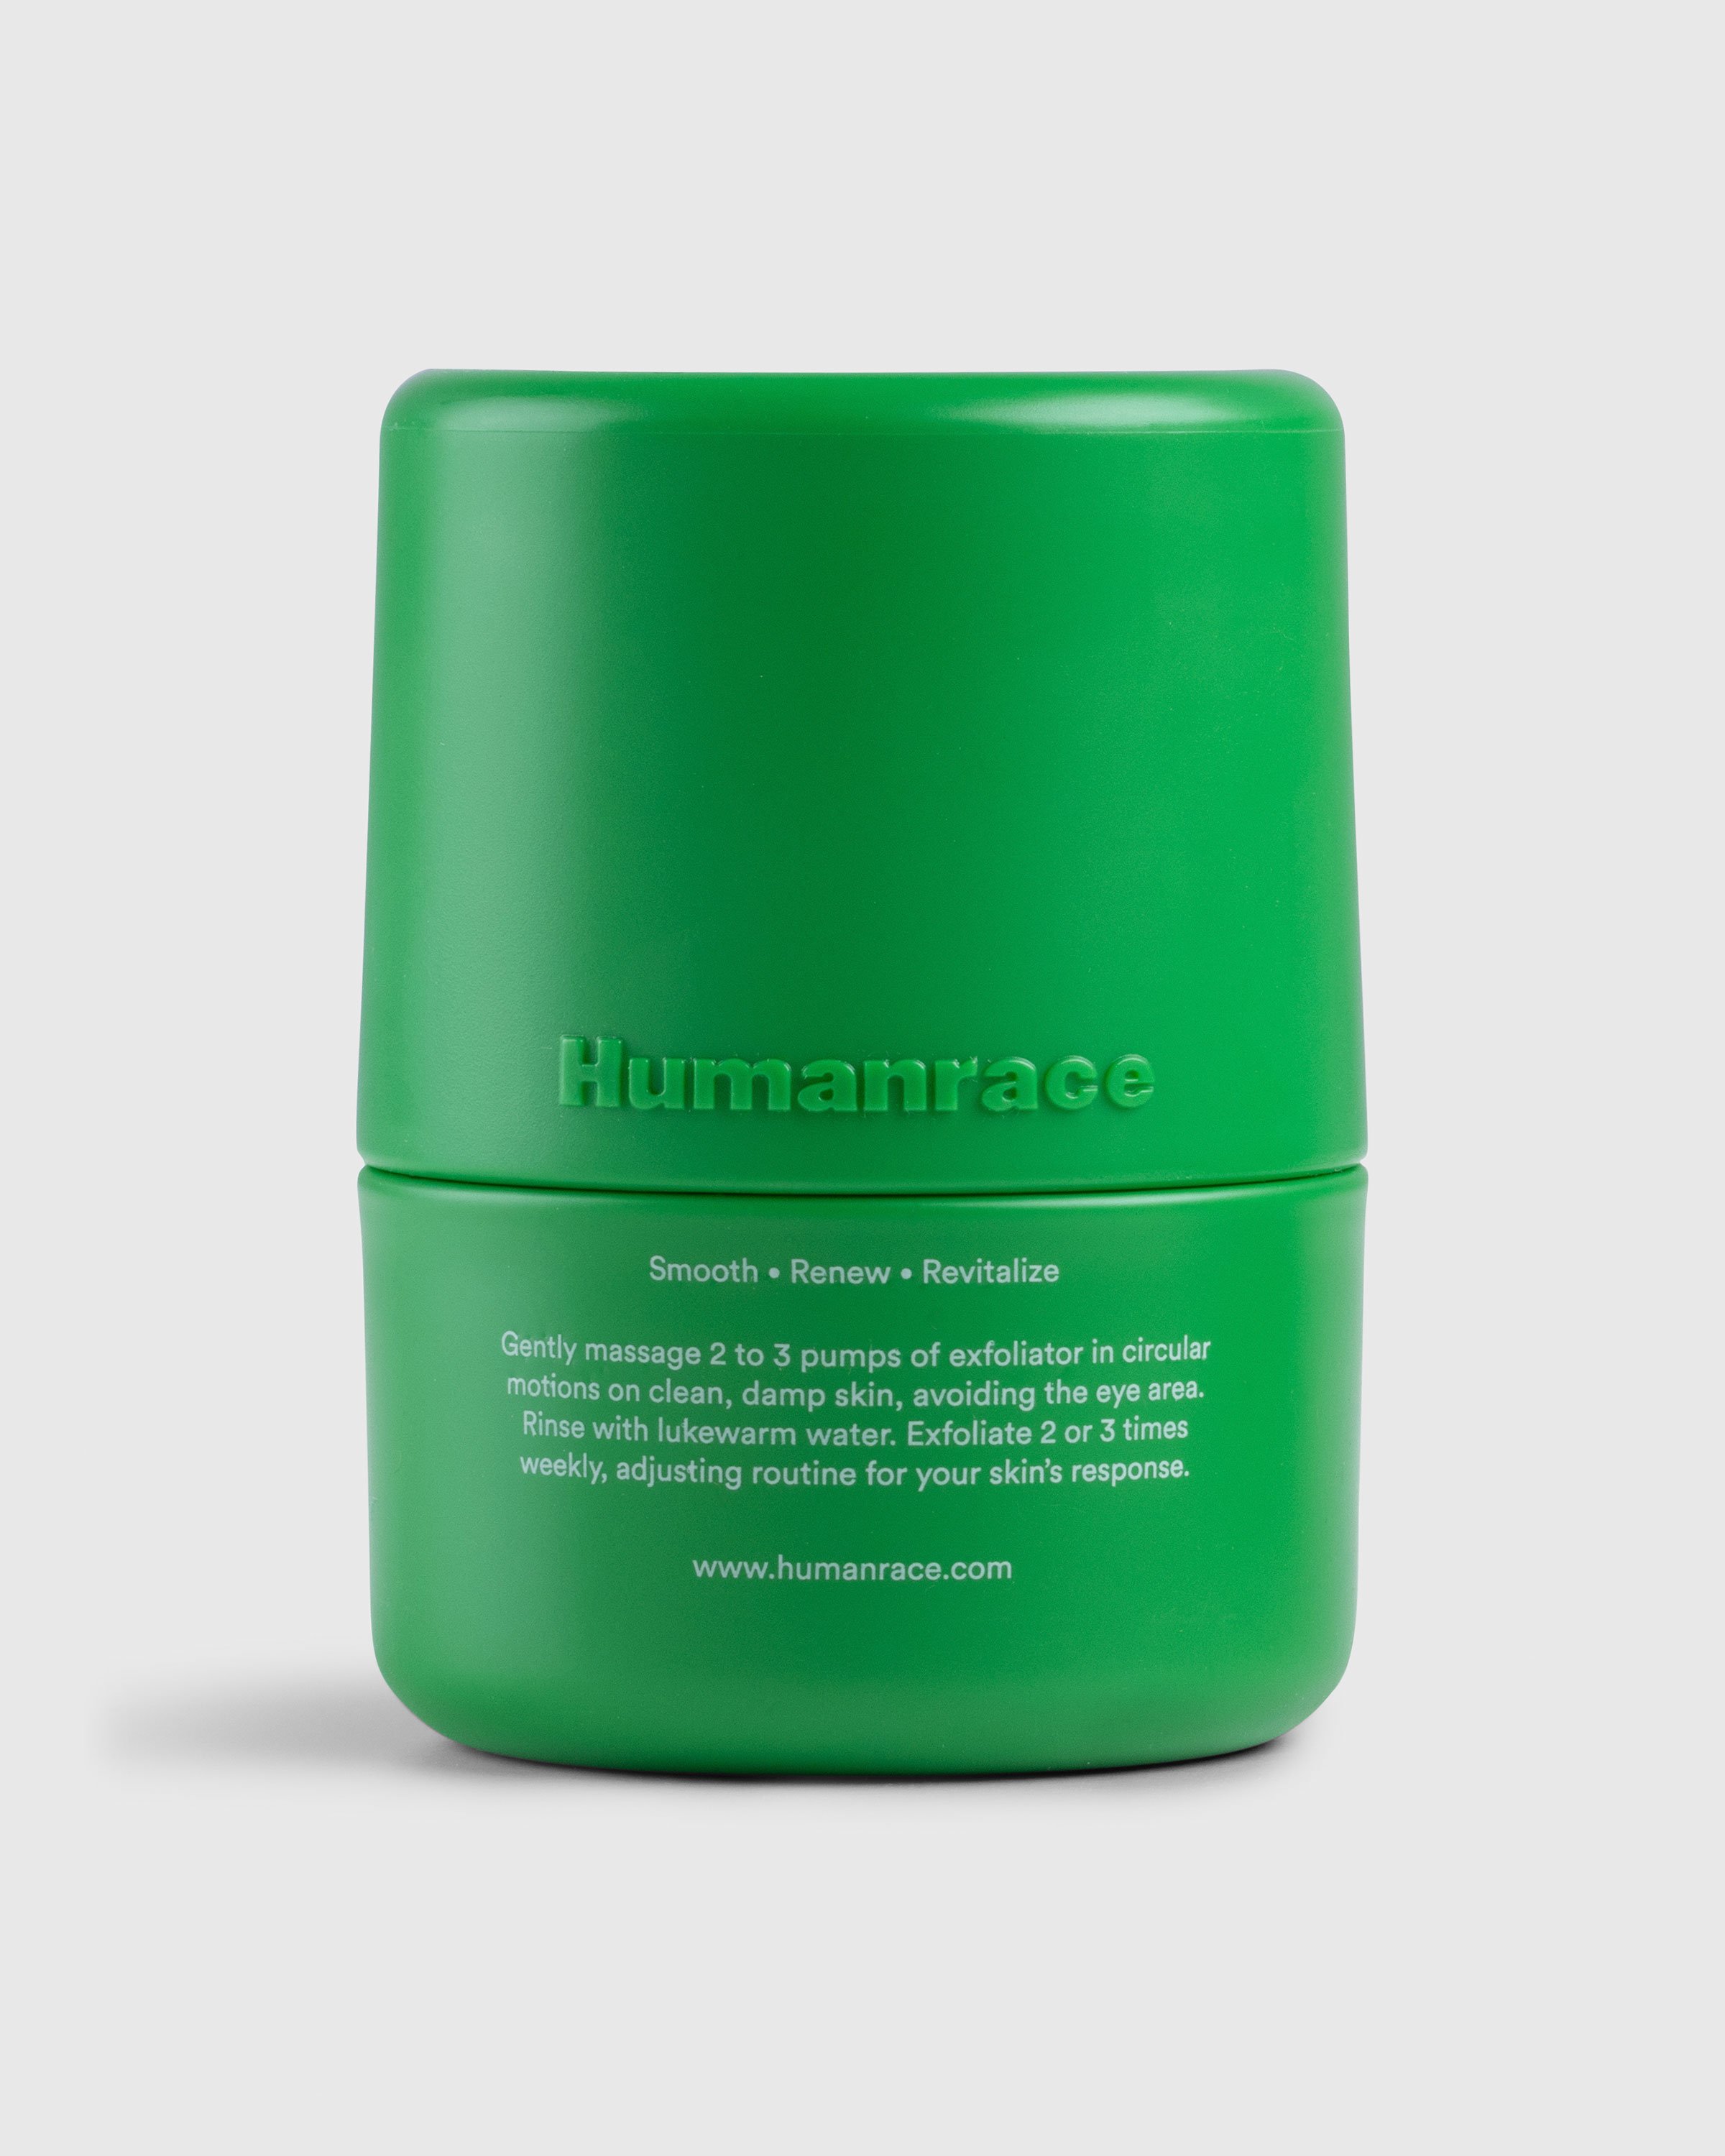 Humanrace - Routine Pack Skincare Set - Lifestyle - Green - Image 2